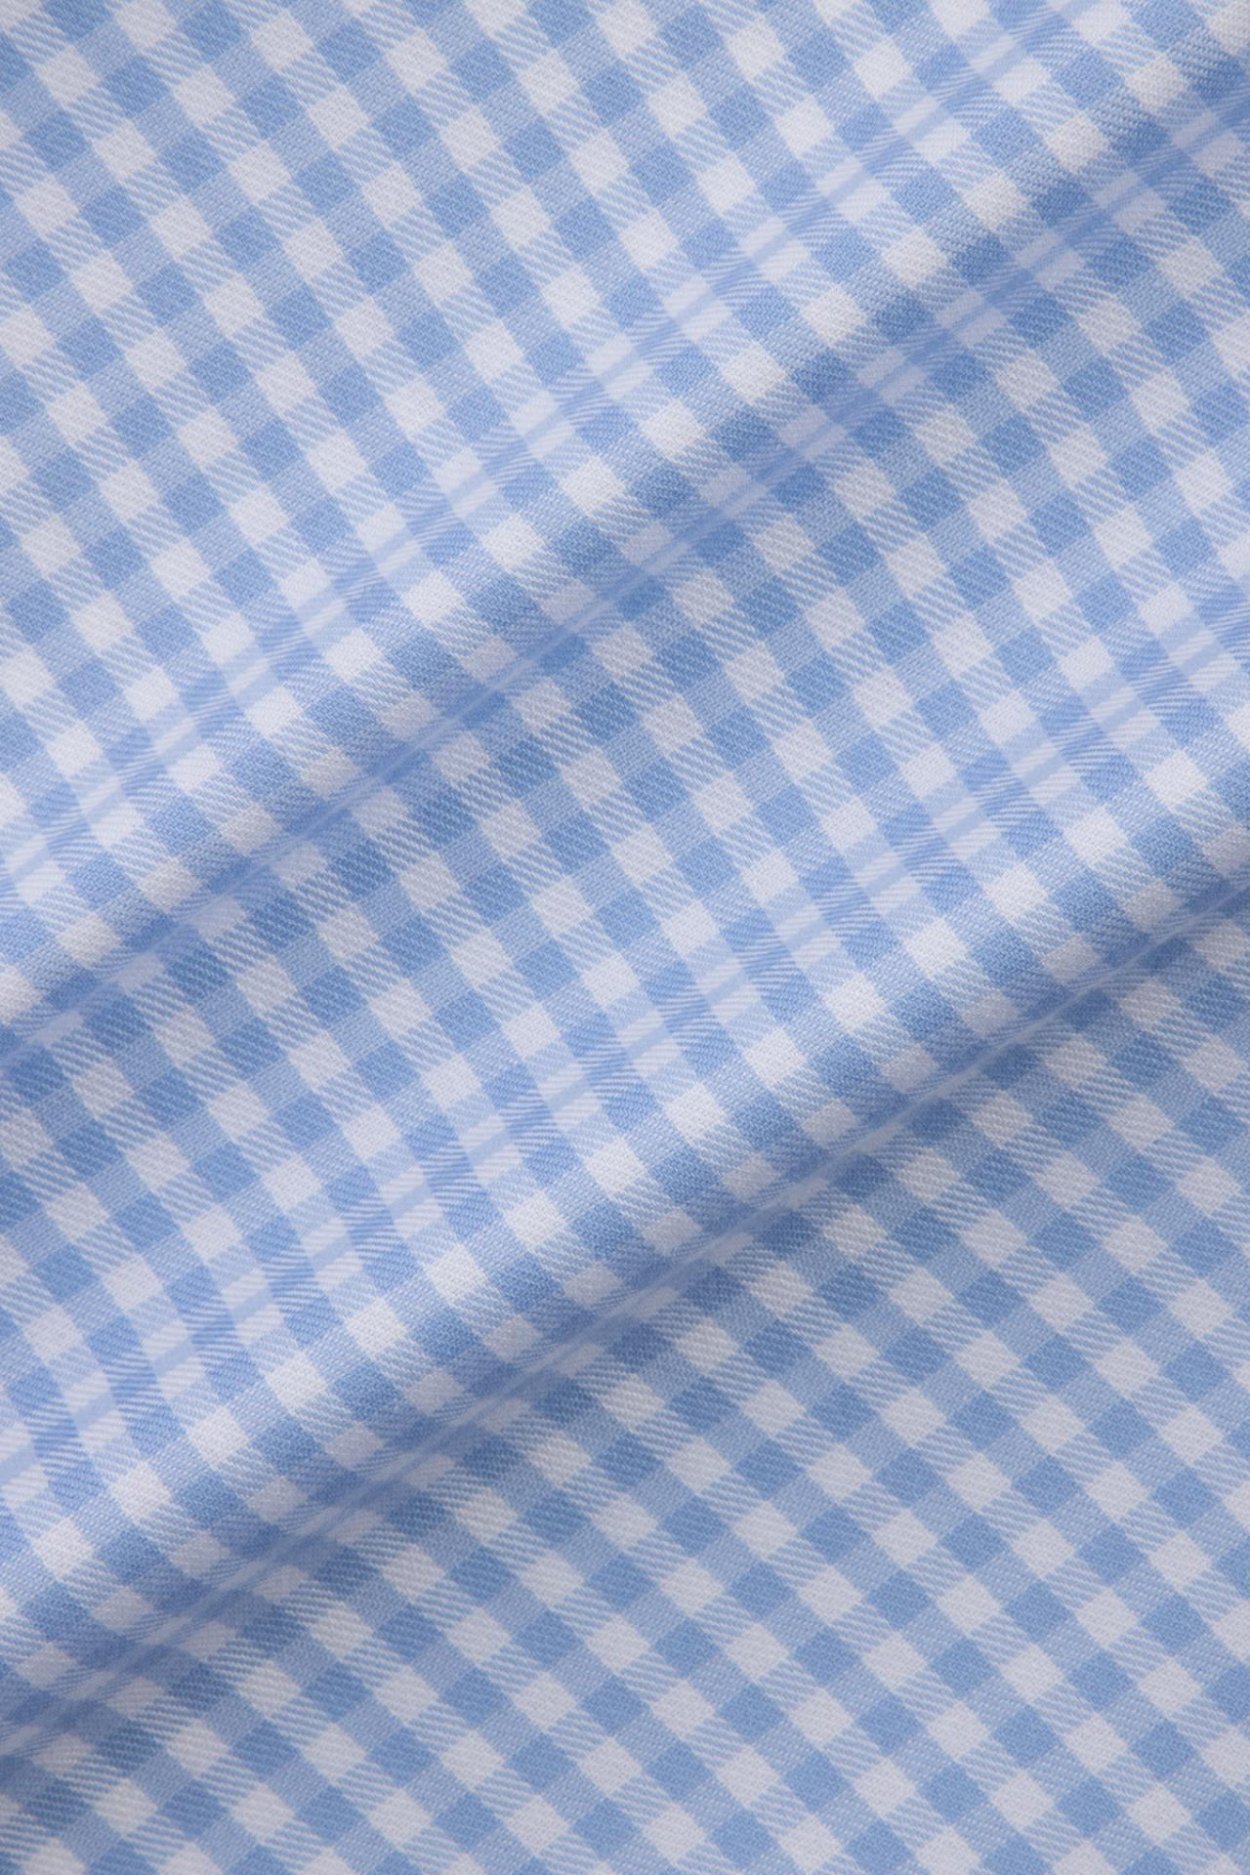 Pánská modrobílá non-iron kostkovaná košile